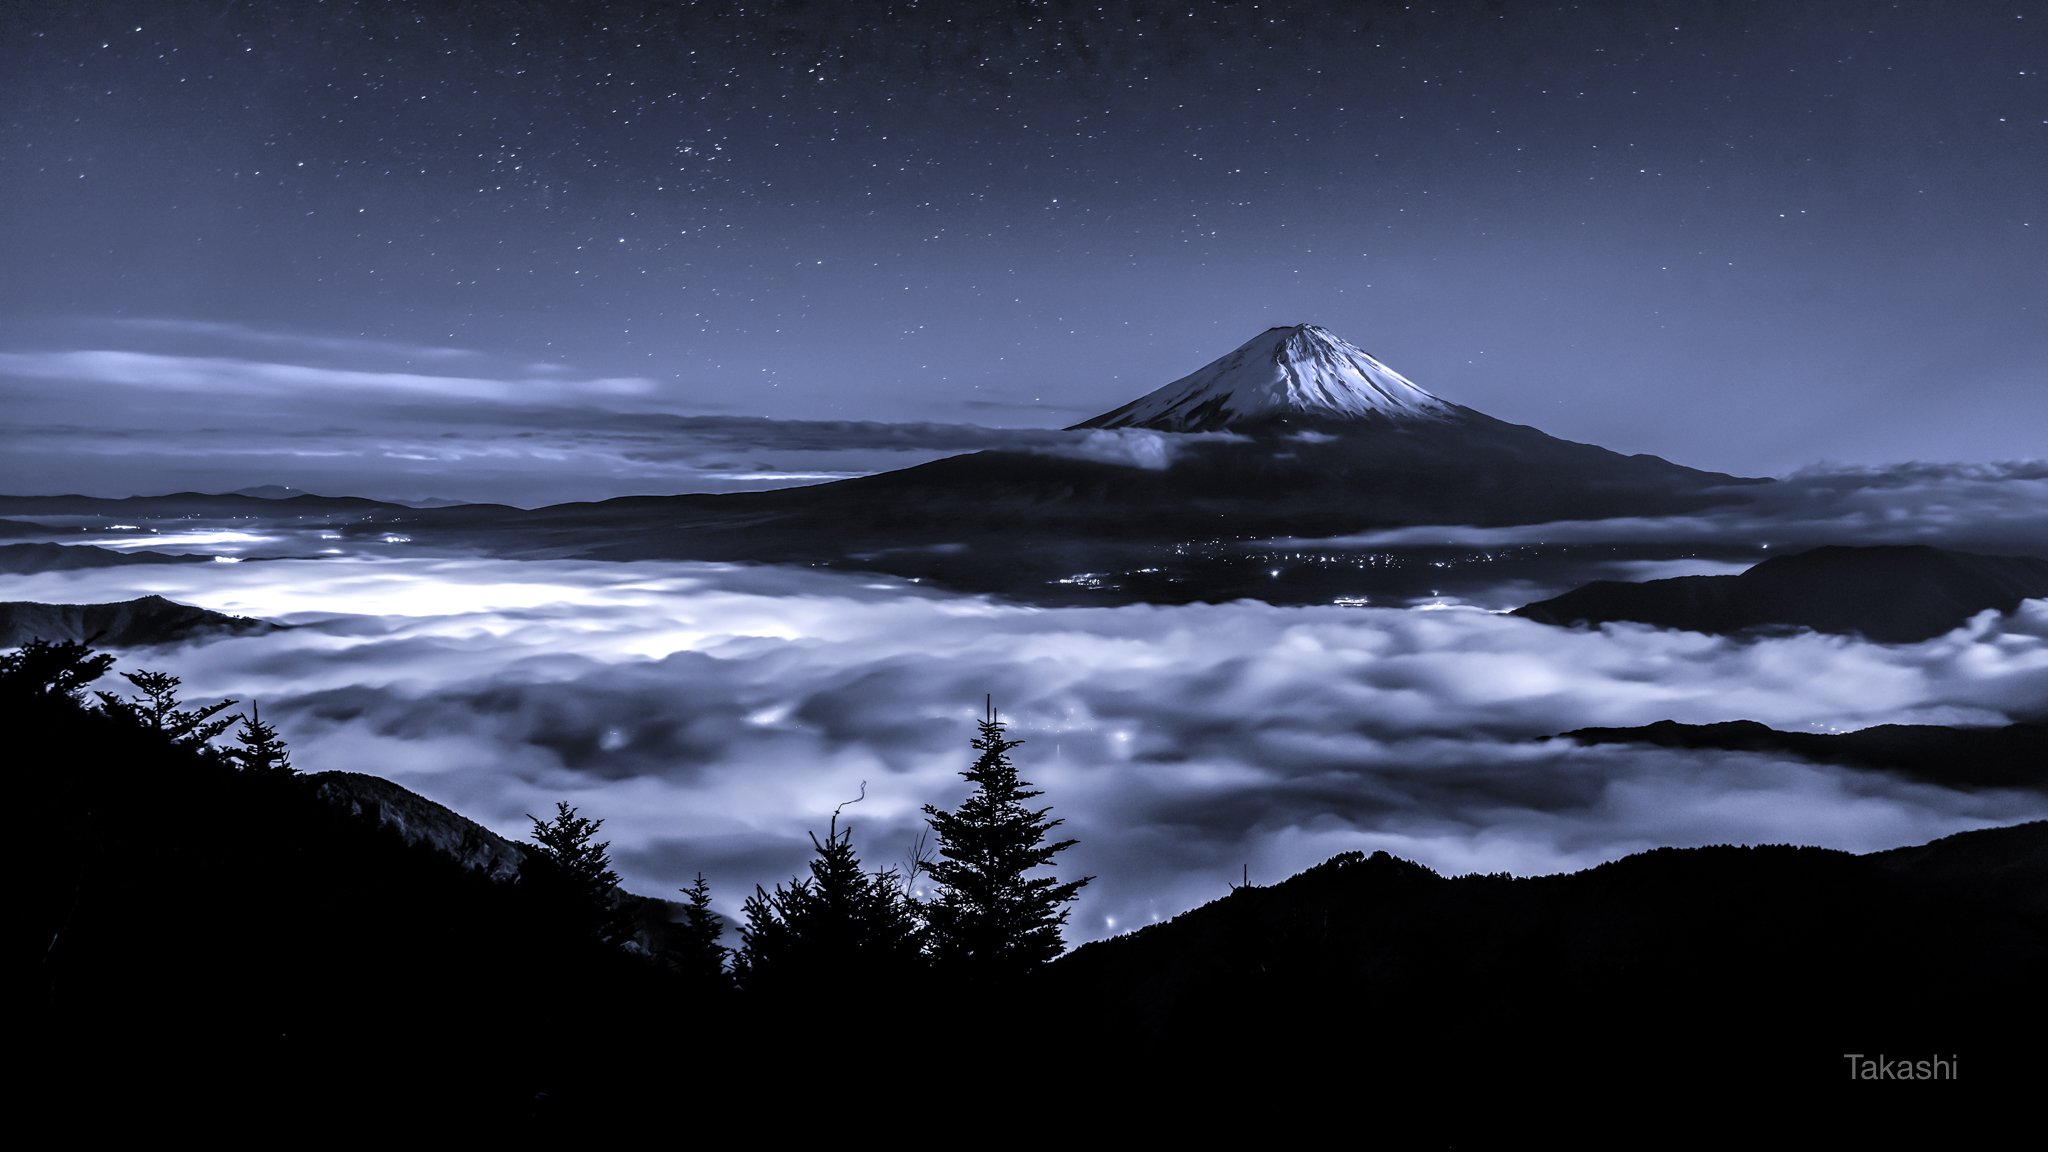 Fuji,Japan,mountain,clouds,sky,stars,sea of clouds,tree,night,moonlit,amazing,beautiful,snow, Takashi